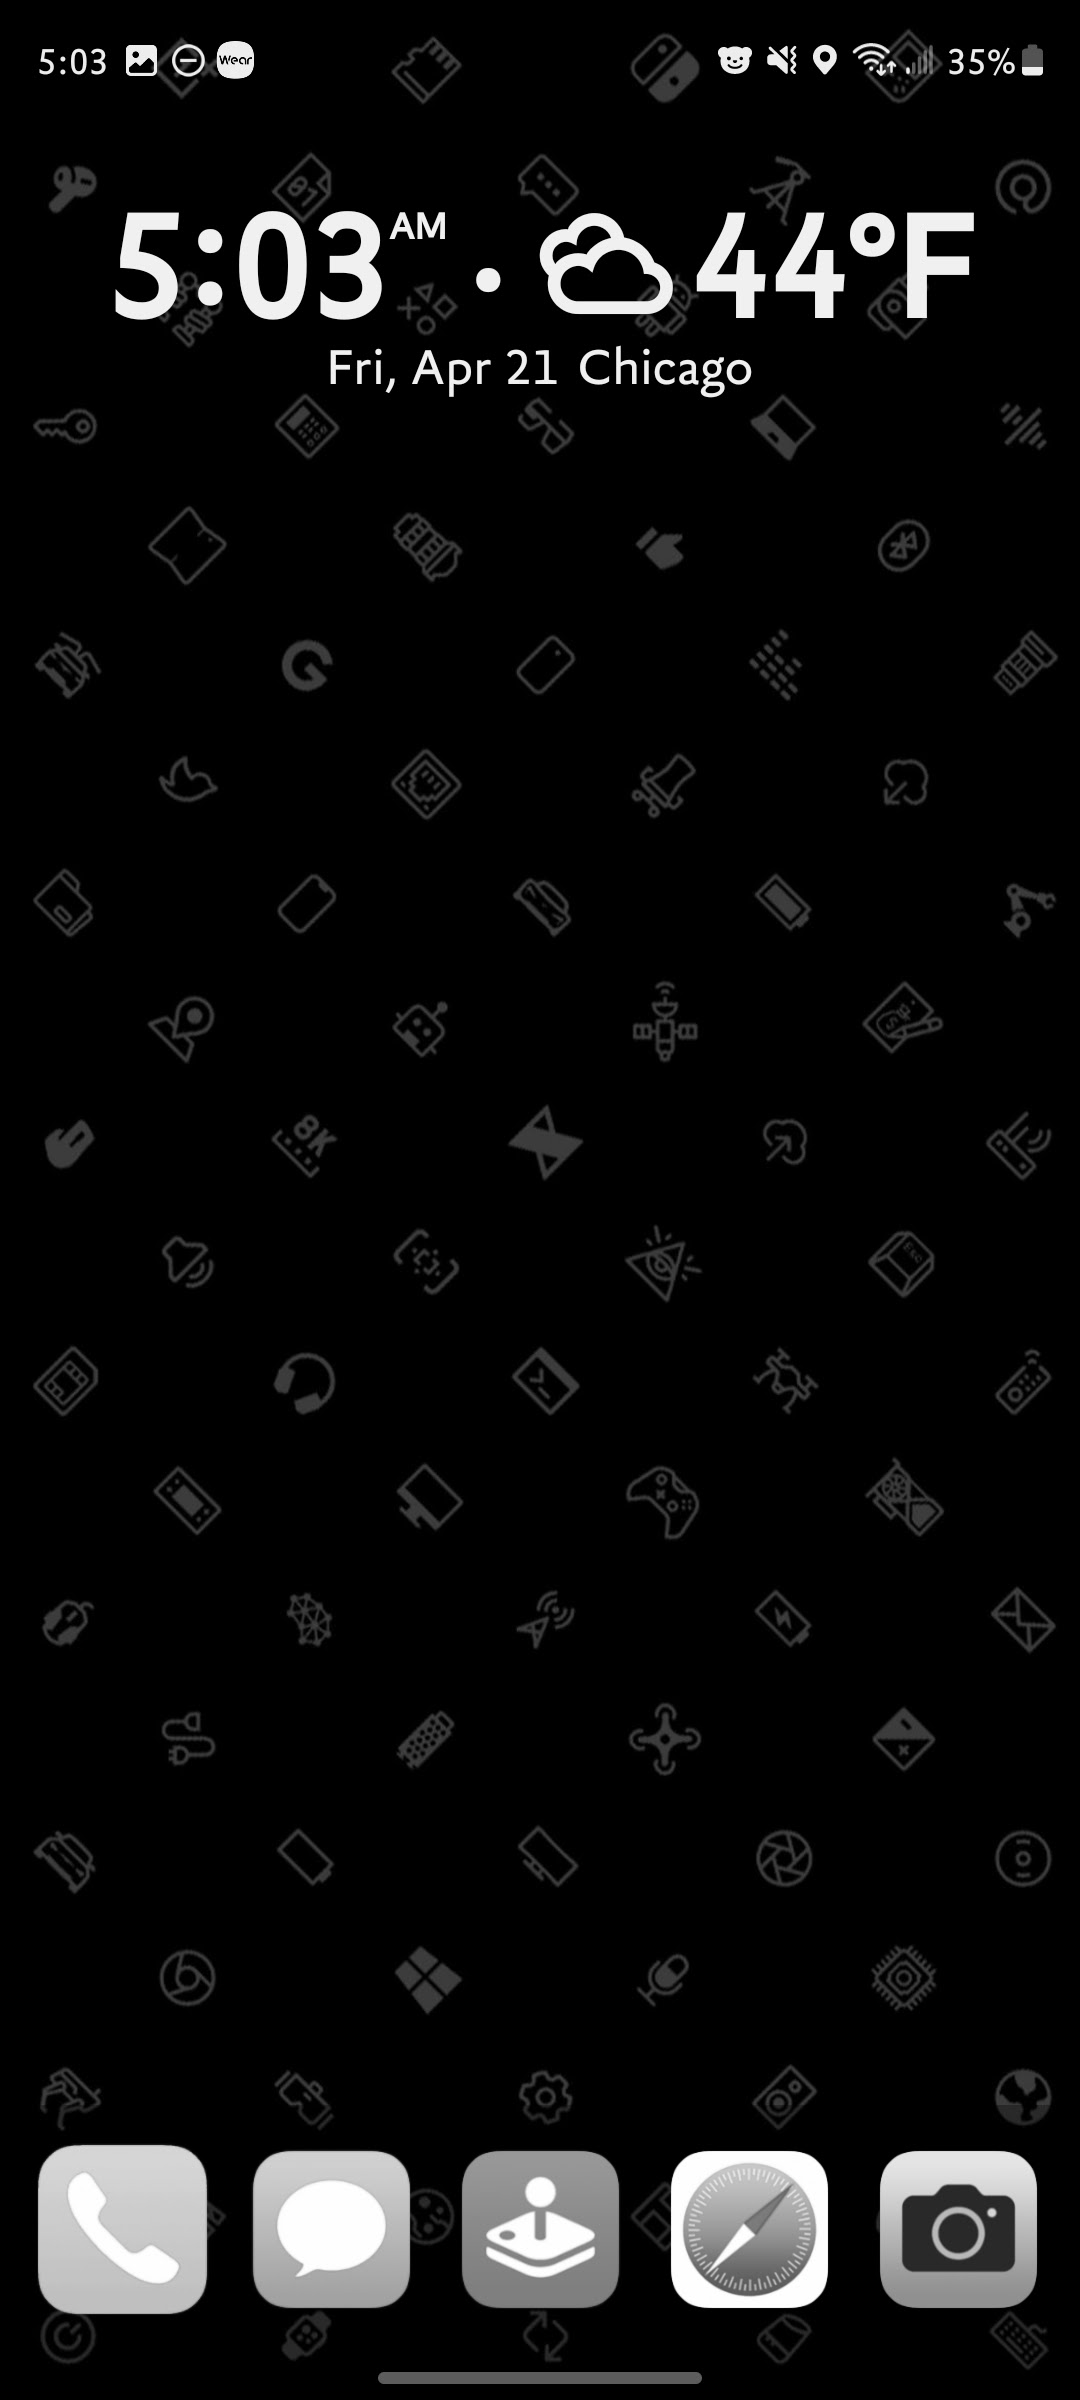 Screenshot of phone screen that is black and white